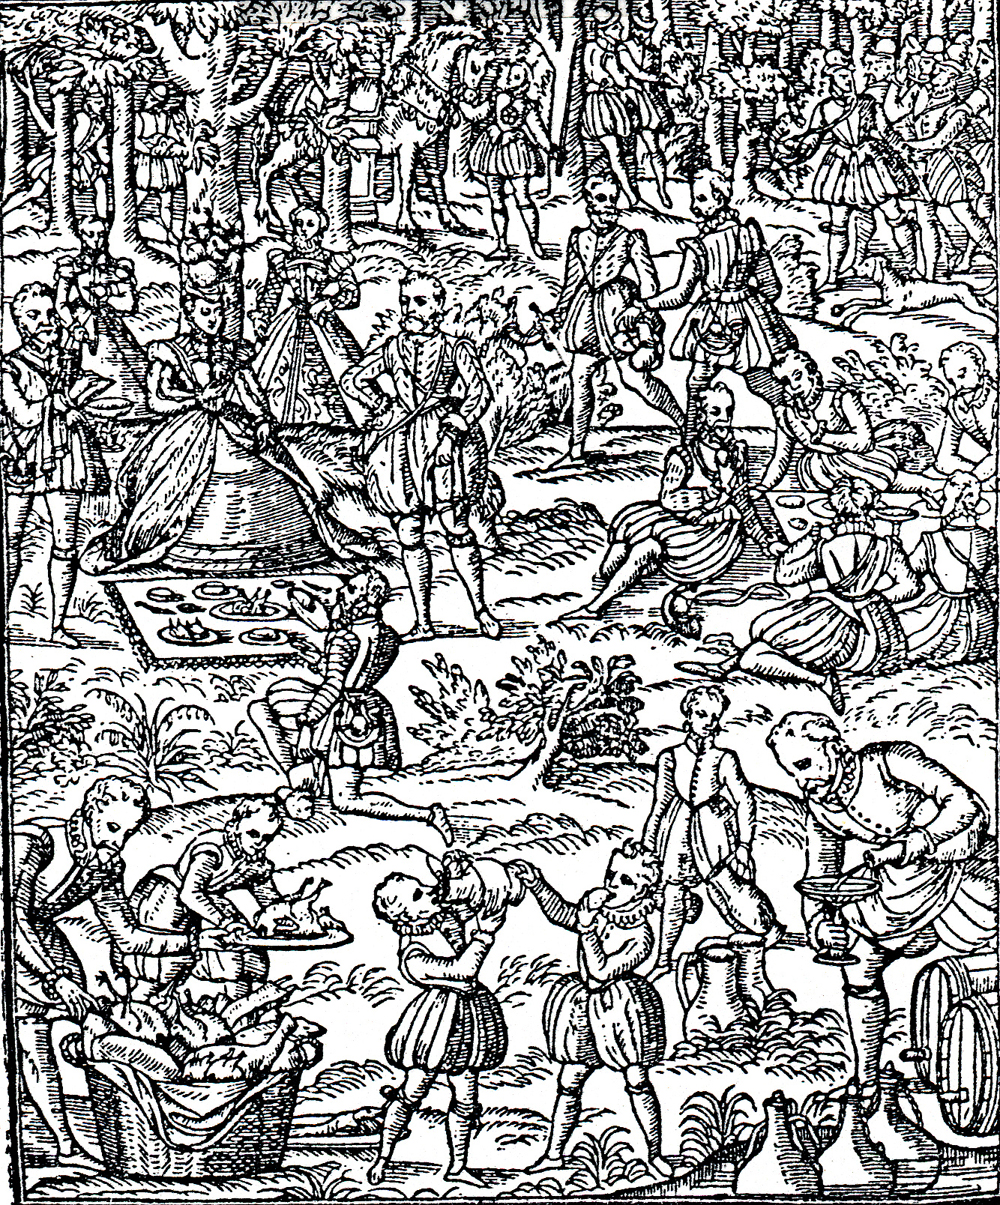 George Gascoigne’s The Noble Arte of Venerie or Hunting (1575)